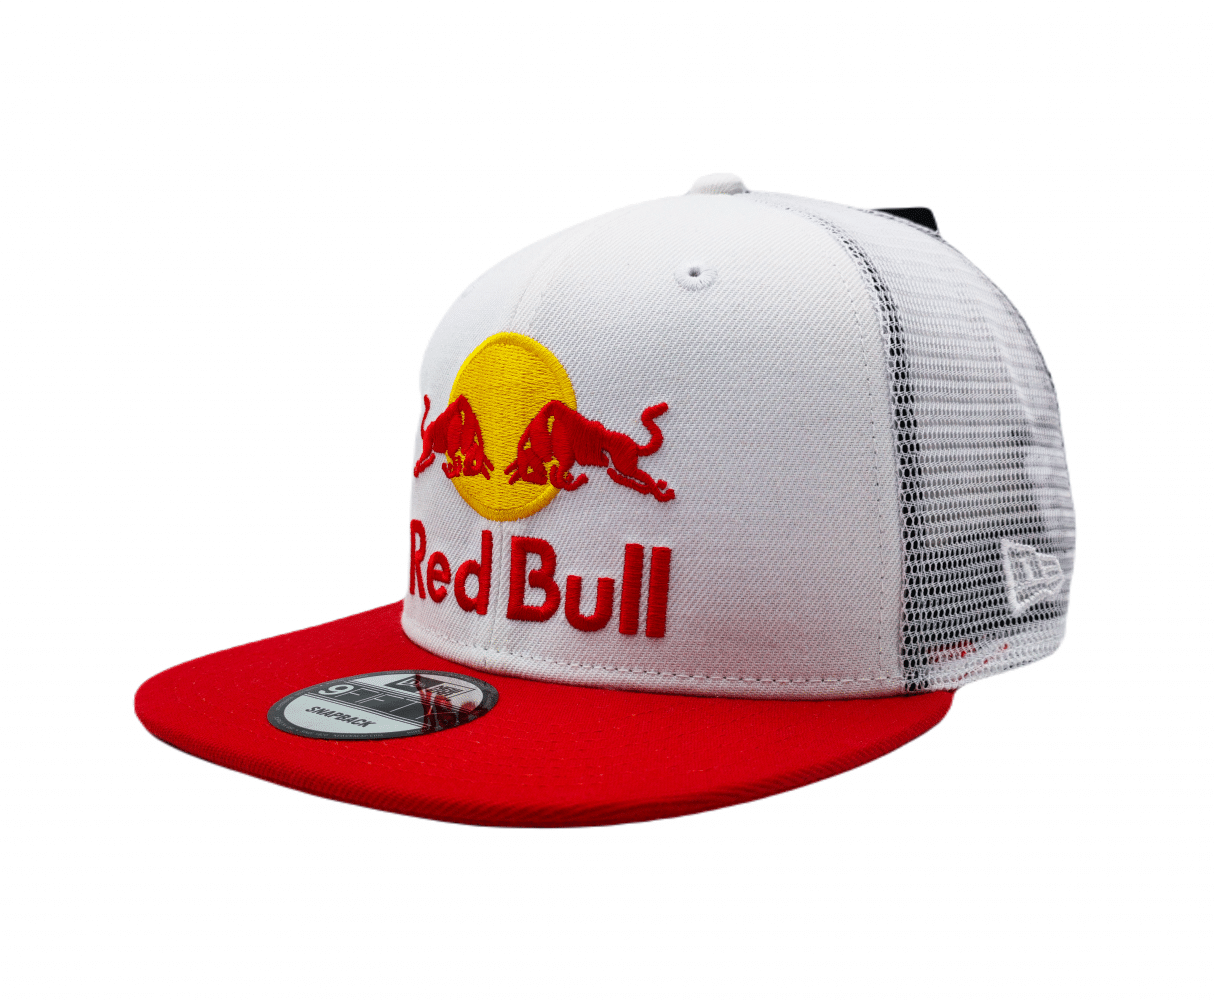 Red Bull Hats Shop Buy, Save 51% | jlcatj.gob.mx